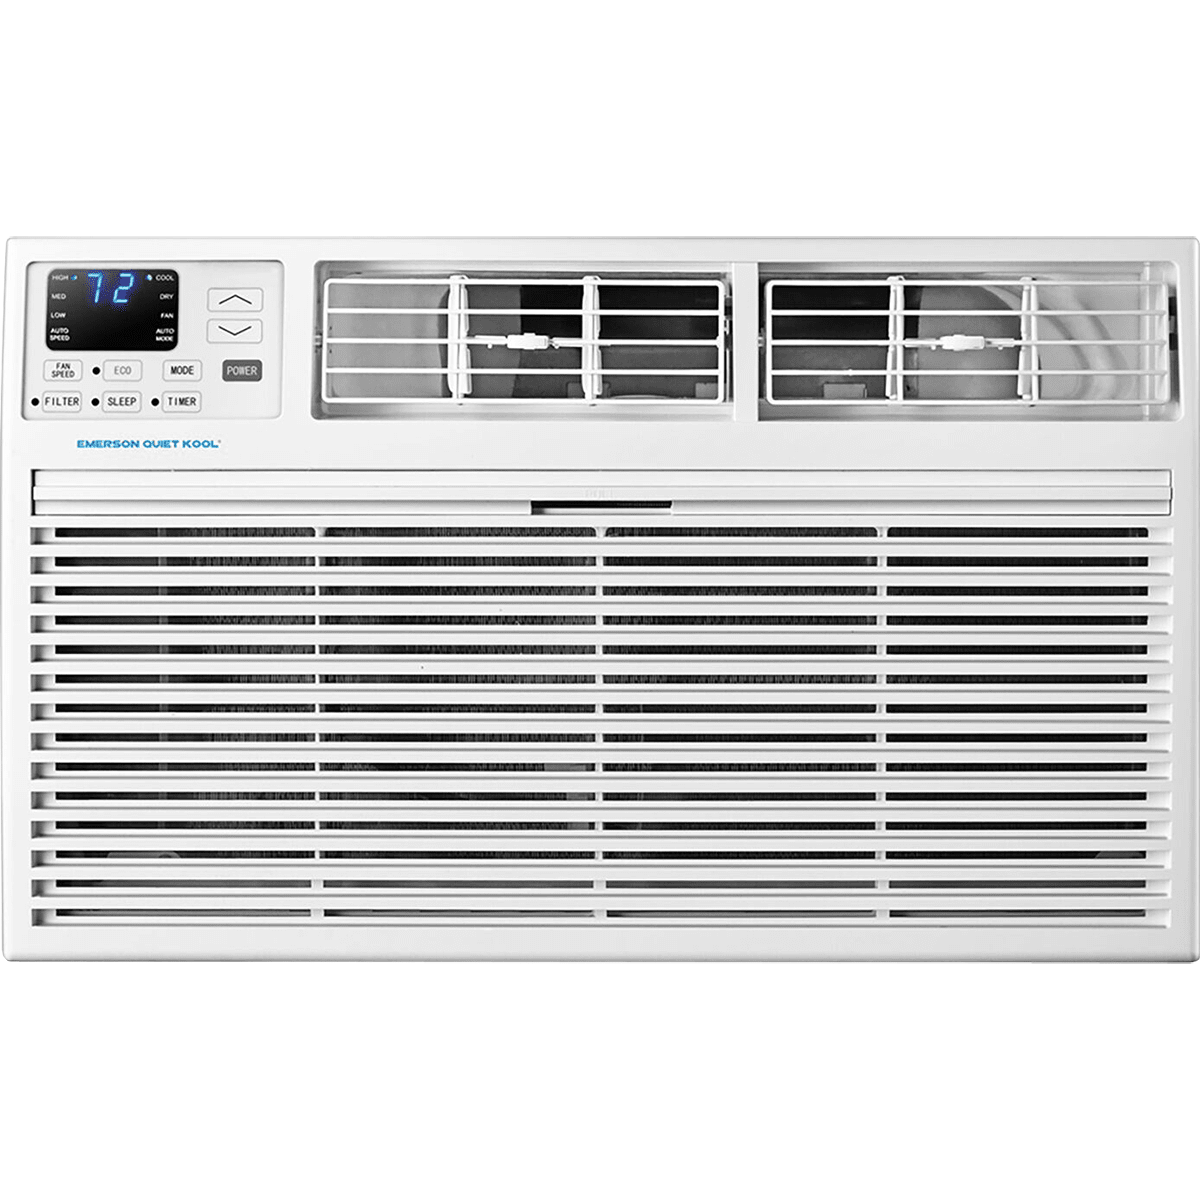 Emerson Quiet Kool 10,000 BTU Thru-the-Wall Air Conditioner